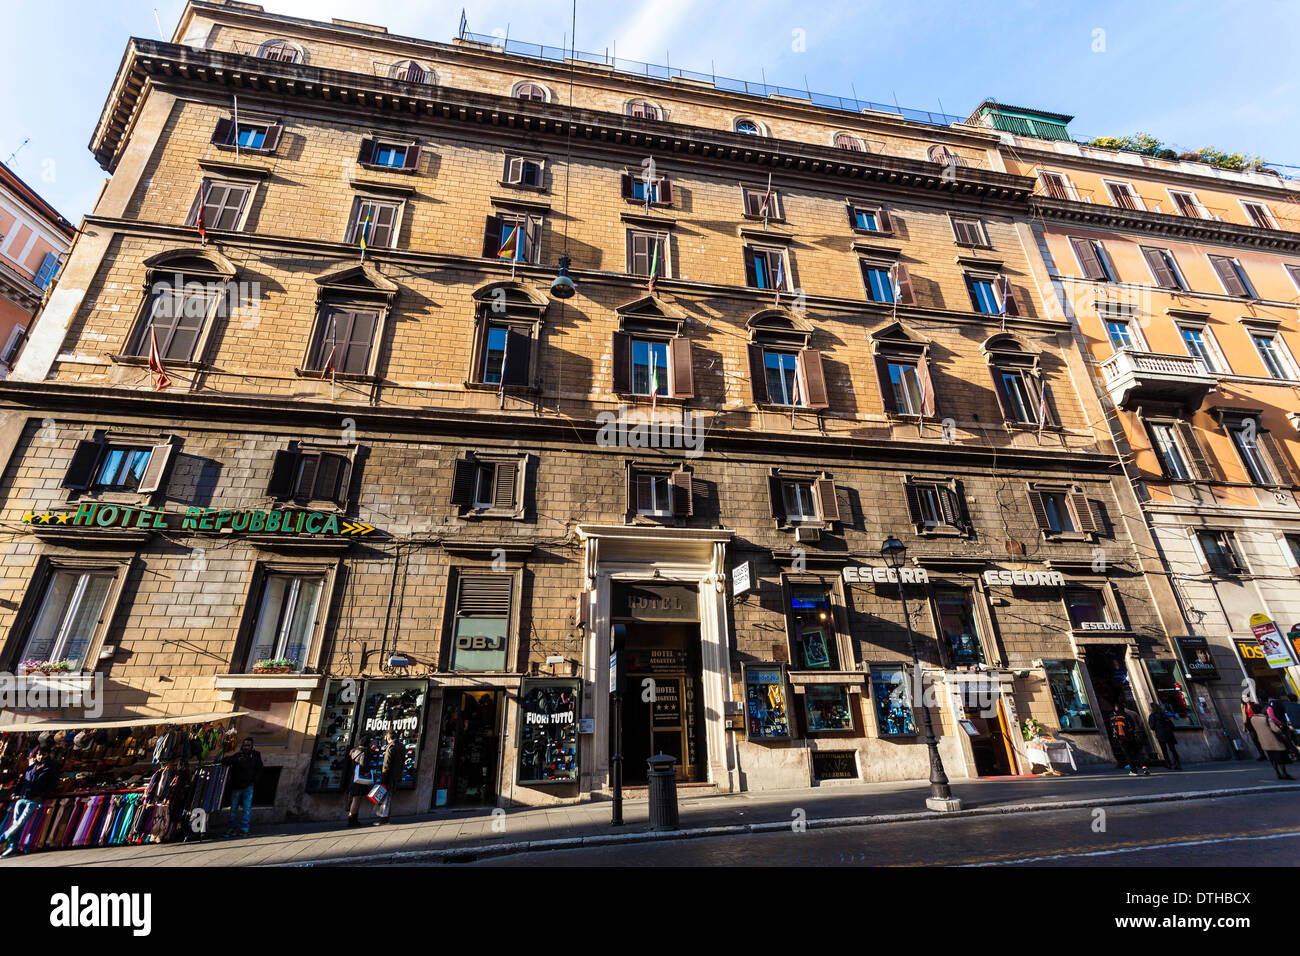 Hotel Republica, Rom, Italien Stockfoto